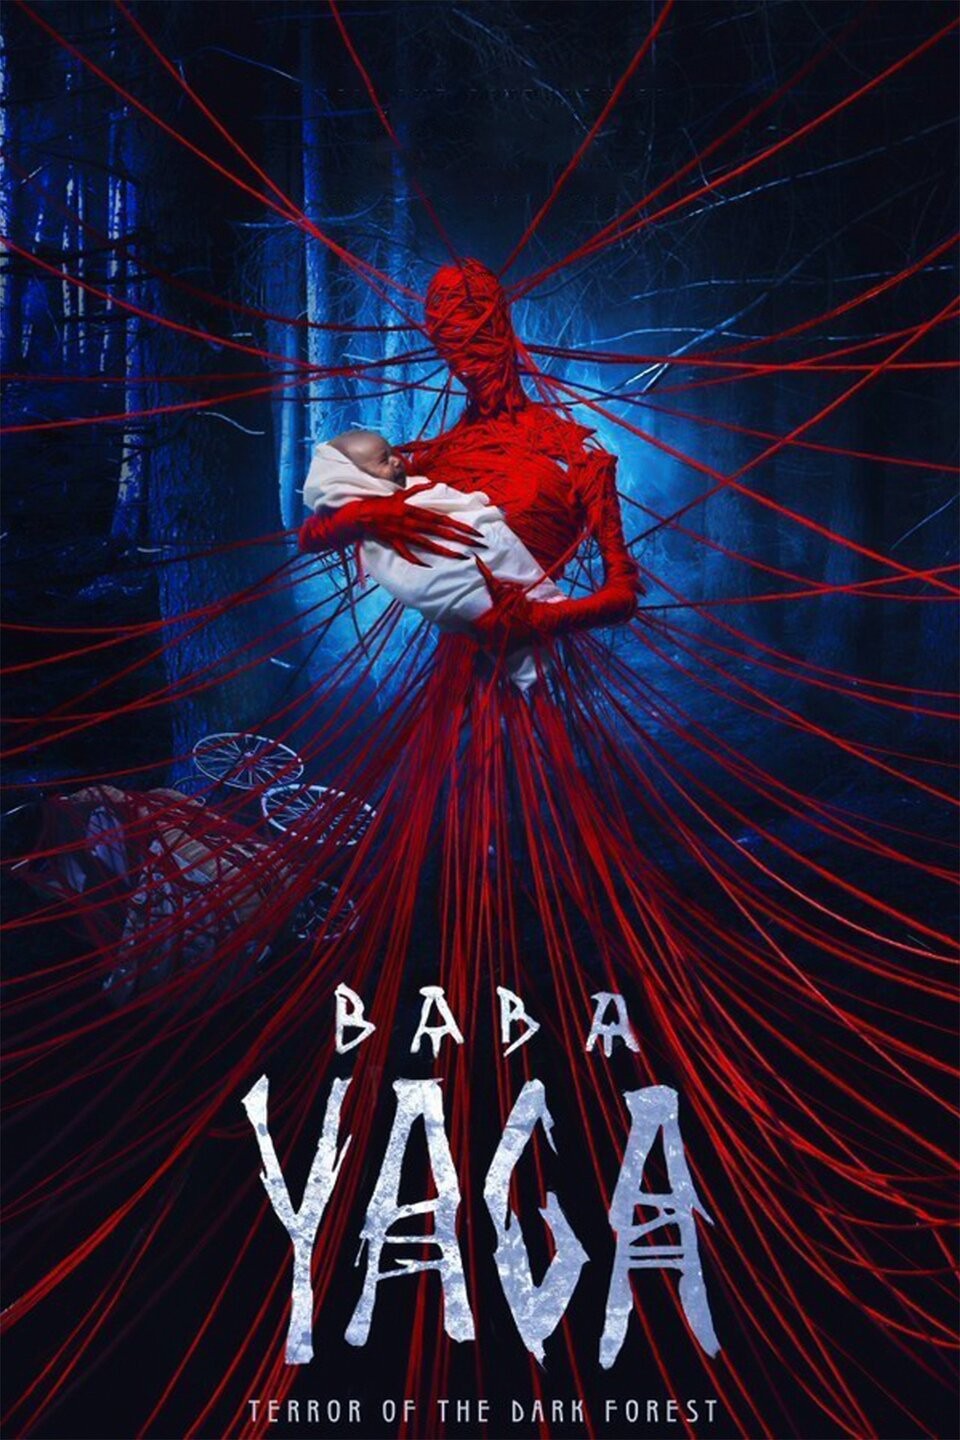 Baba yaga terror of the dark forest